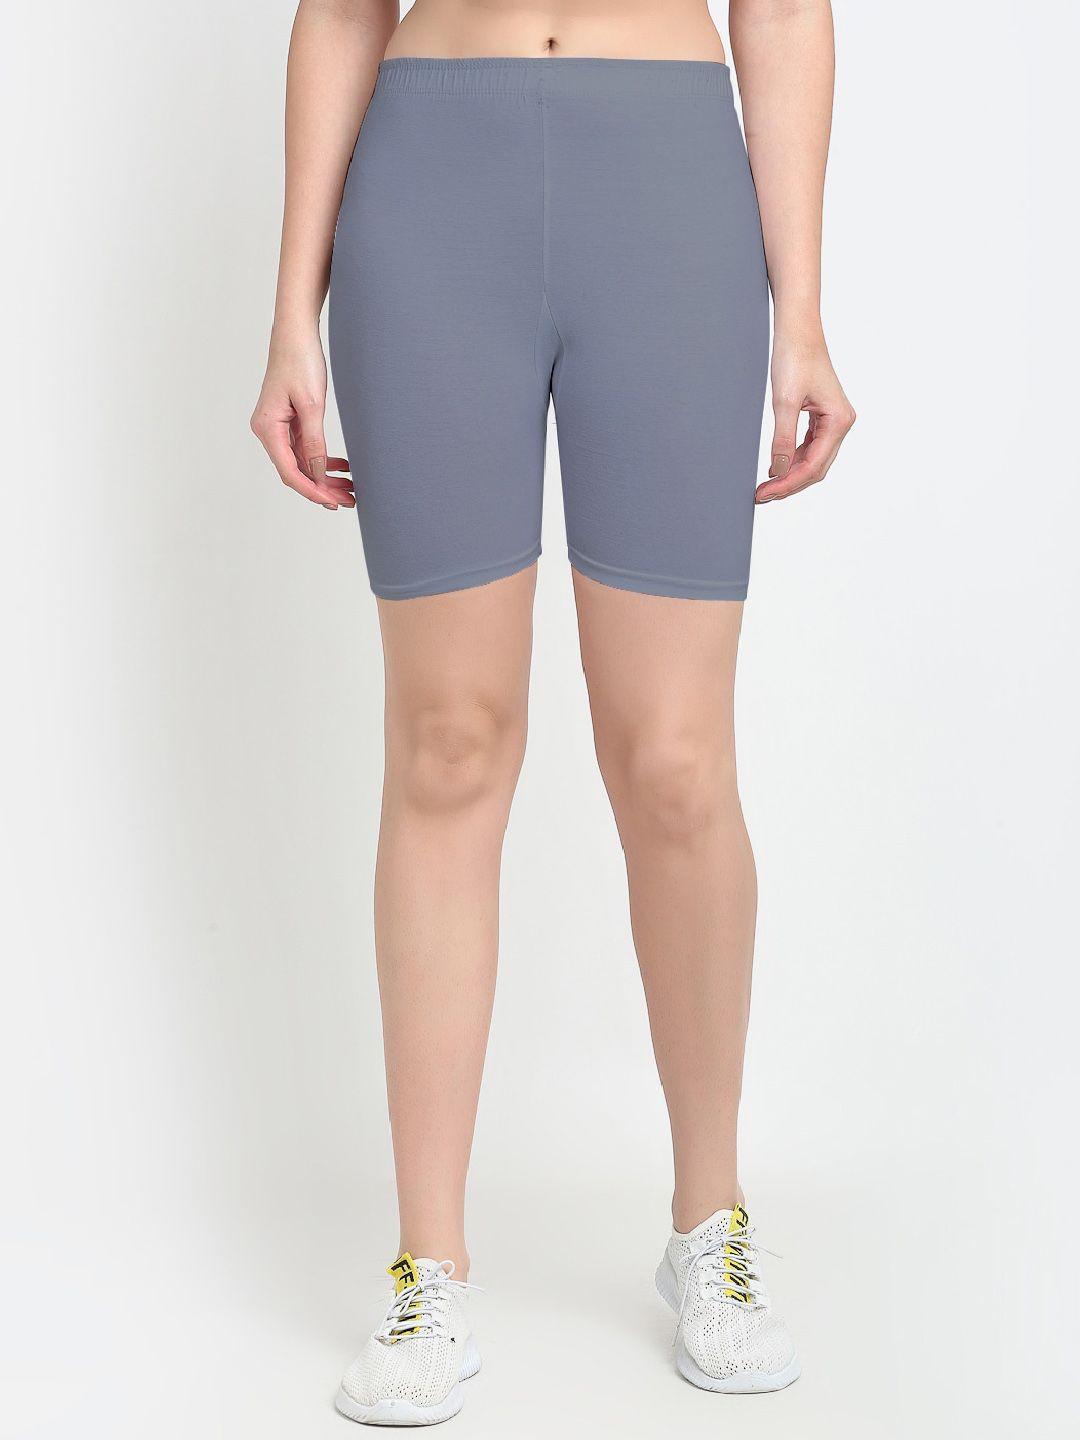 gracit-women-grey-biker-shorts